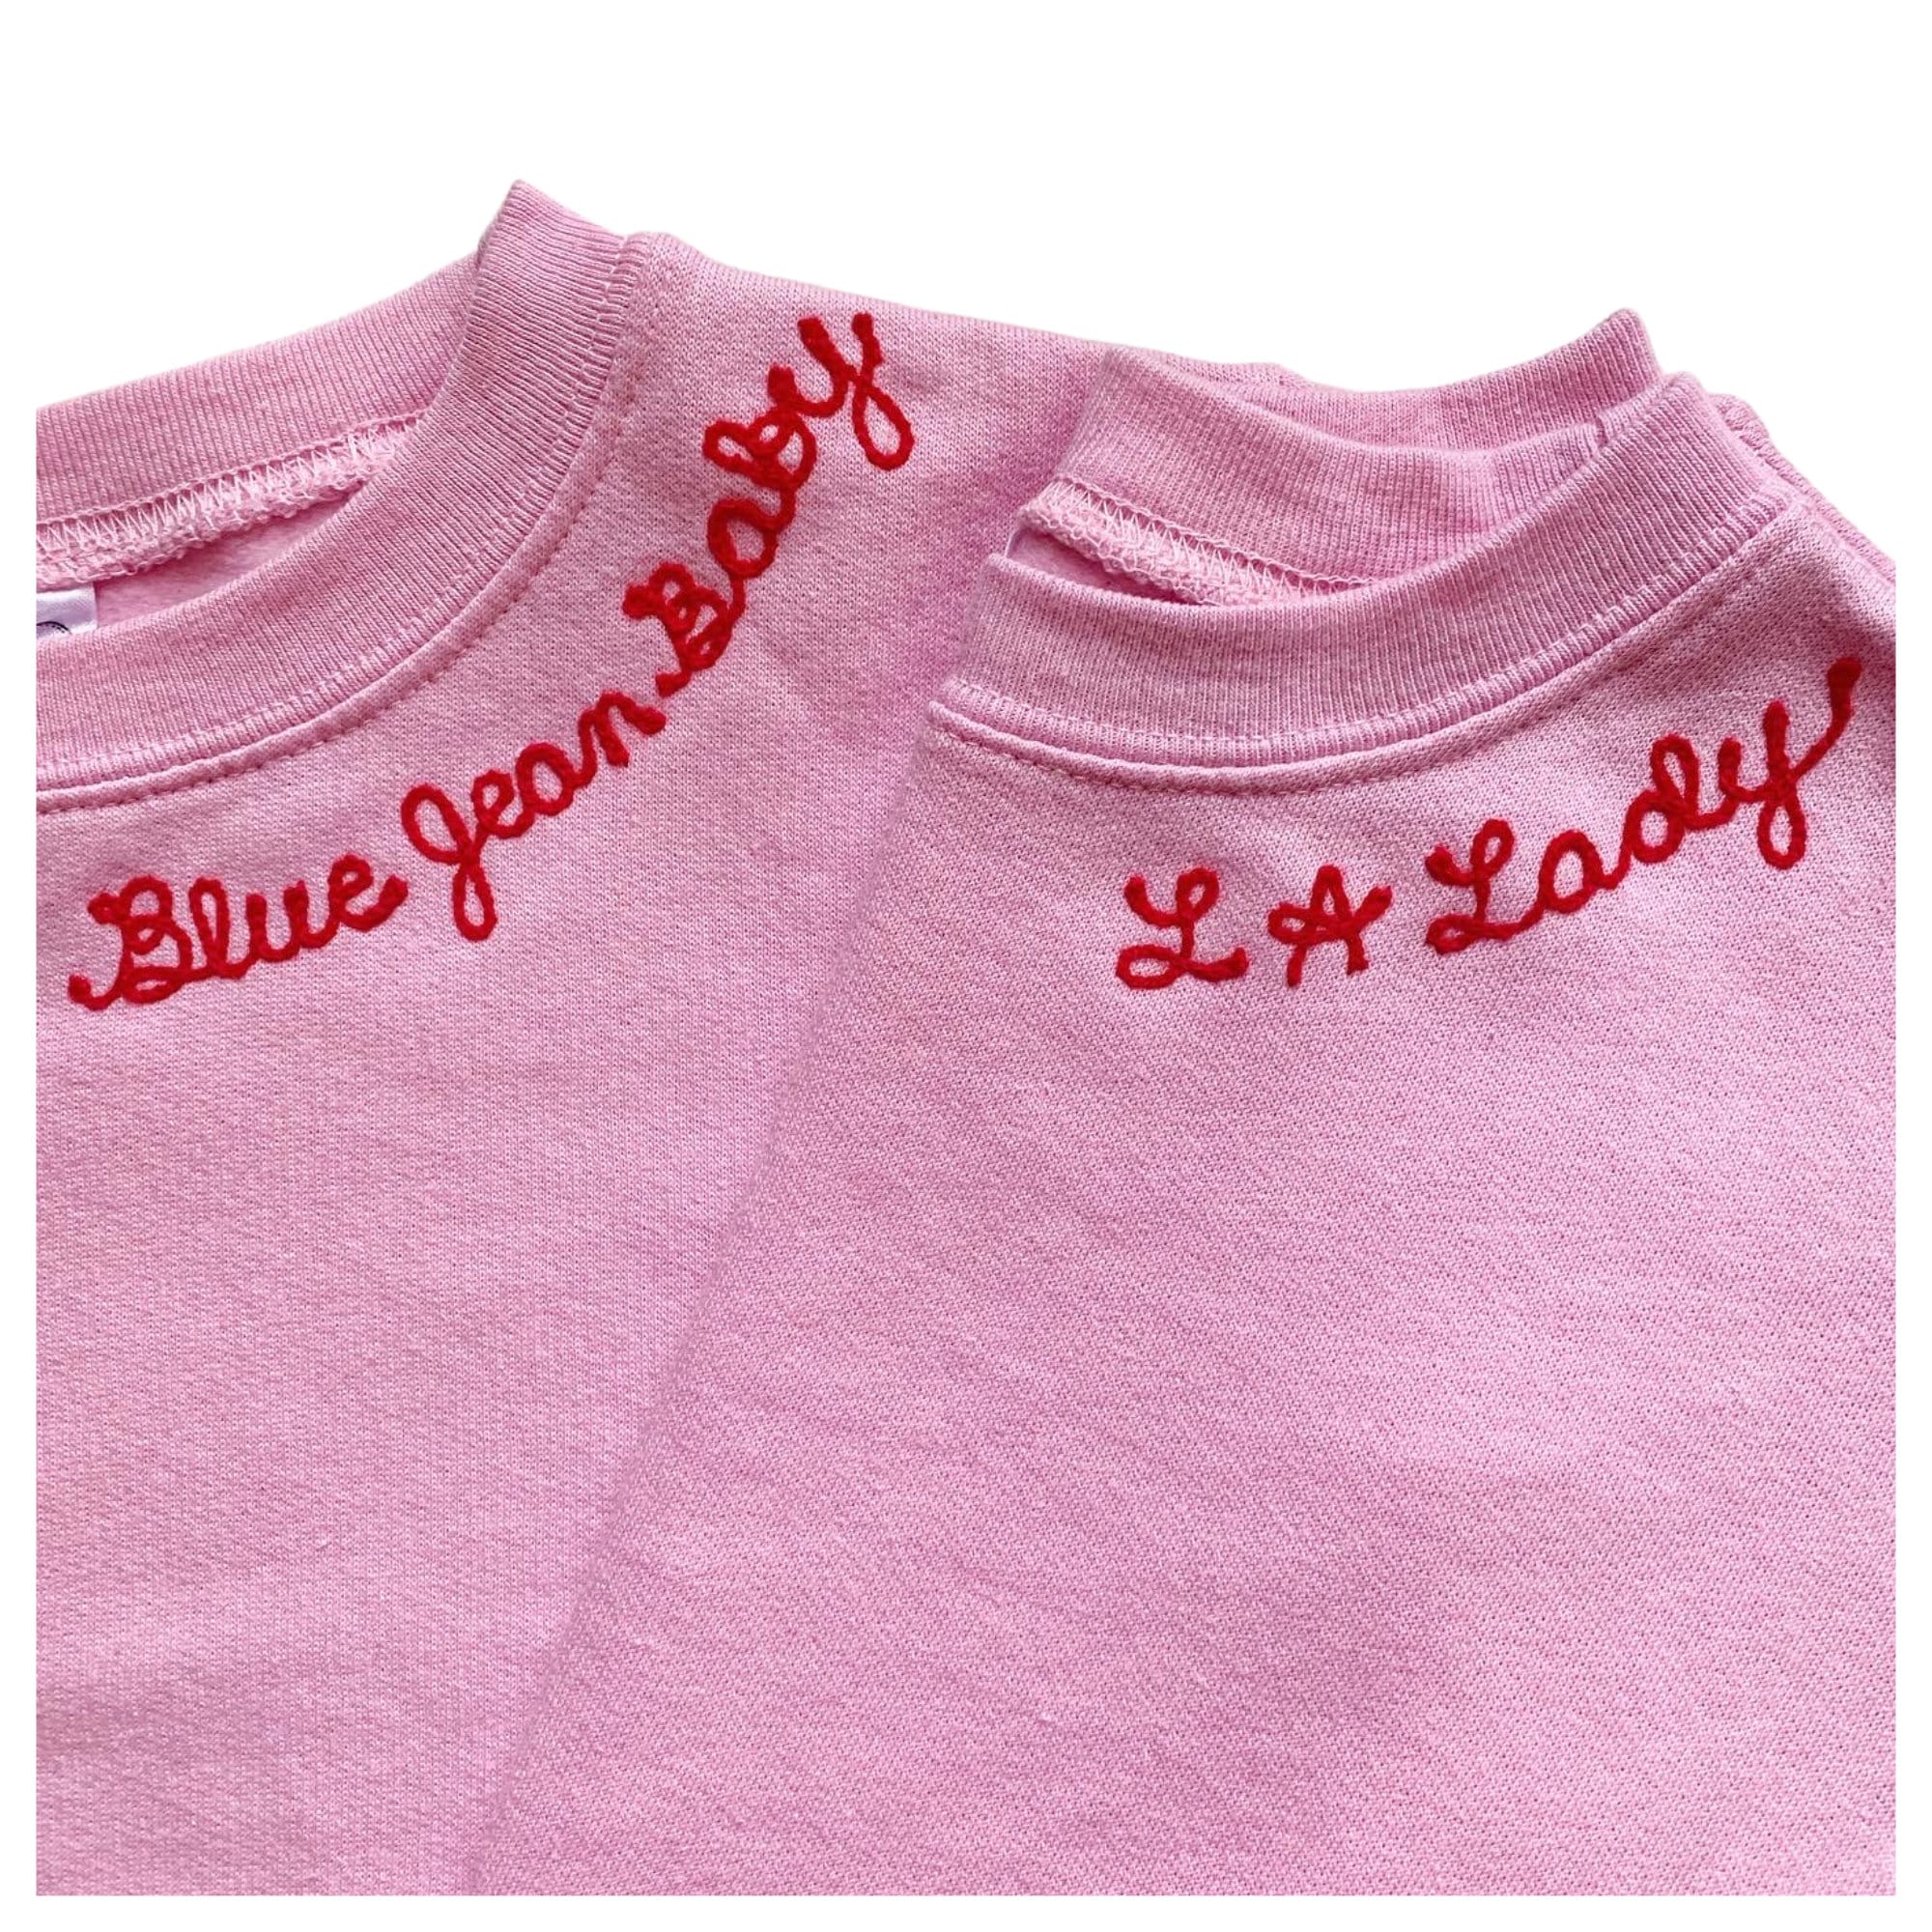 Toddler Neckline Collar Embroidered Sweatshirt Kids Personalized Name Sweatshirt Kleding Unisex kinderkleding Hoodies & Sweatshirts Sweatshirts Personalized Toddler Gift Gift For Toddler 